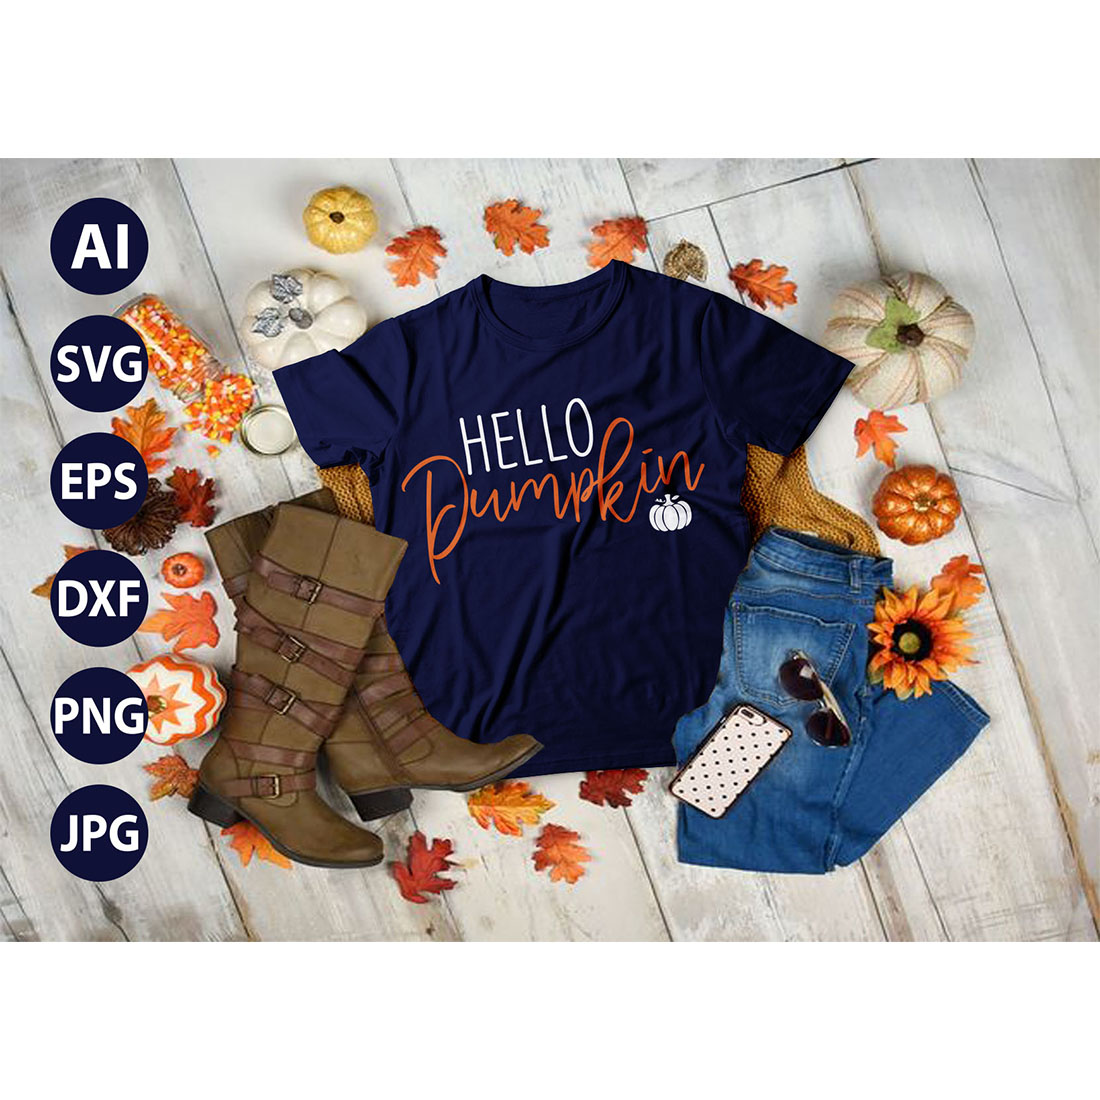 Hello Pumpkin, SVG T-Shirt Design |Happy Halloween & Pumpkin T-Shirt Design | Ai, Svg, Eps, Dxf, Jpeg, Png, Instant download T-Shirt | 100% print-ready Digital vector file cover image.